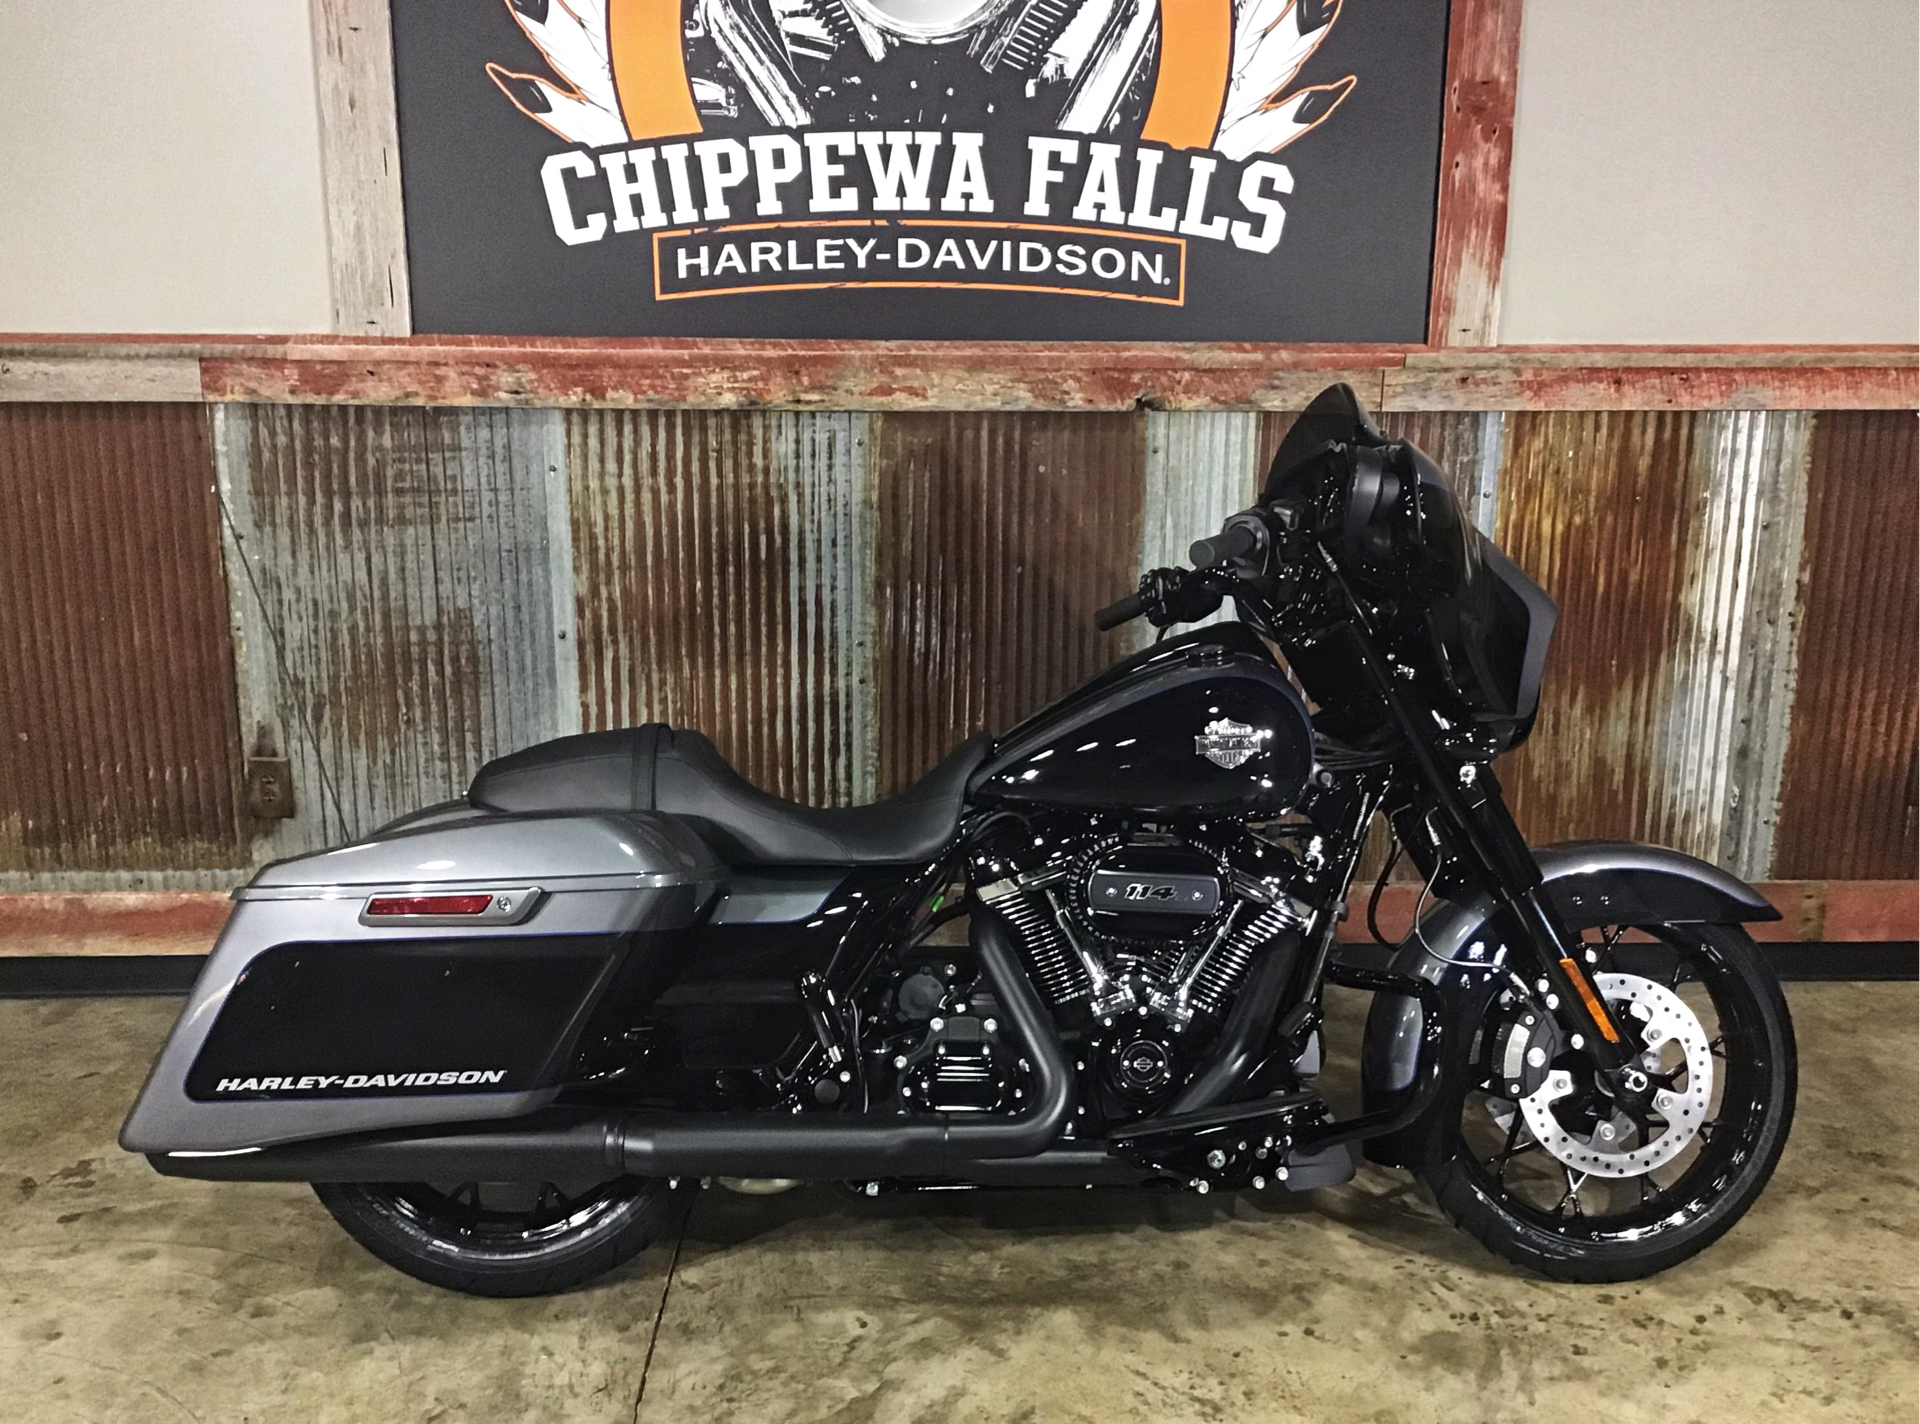 New 2021 Harley Davidson Street Glide Special Gauntlet Gray Metallic Vivid Black Black Pearl Option Motorcycles In Chippewa Falls Wi Fl618220